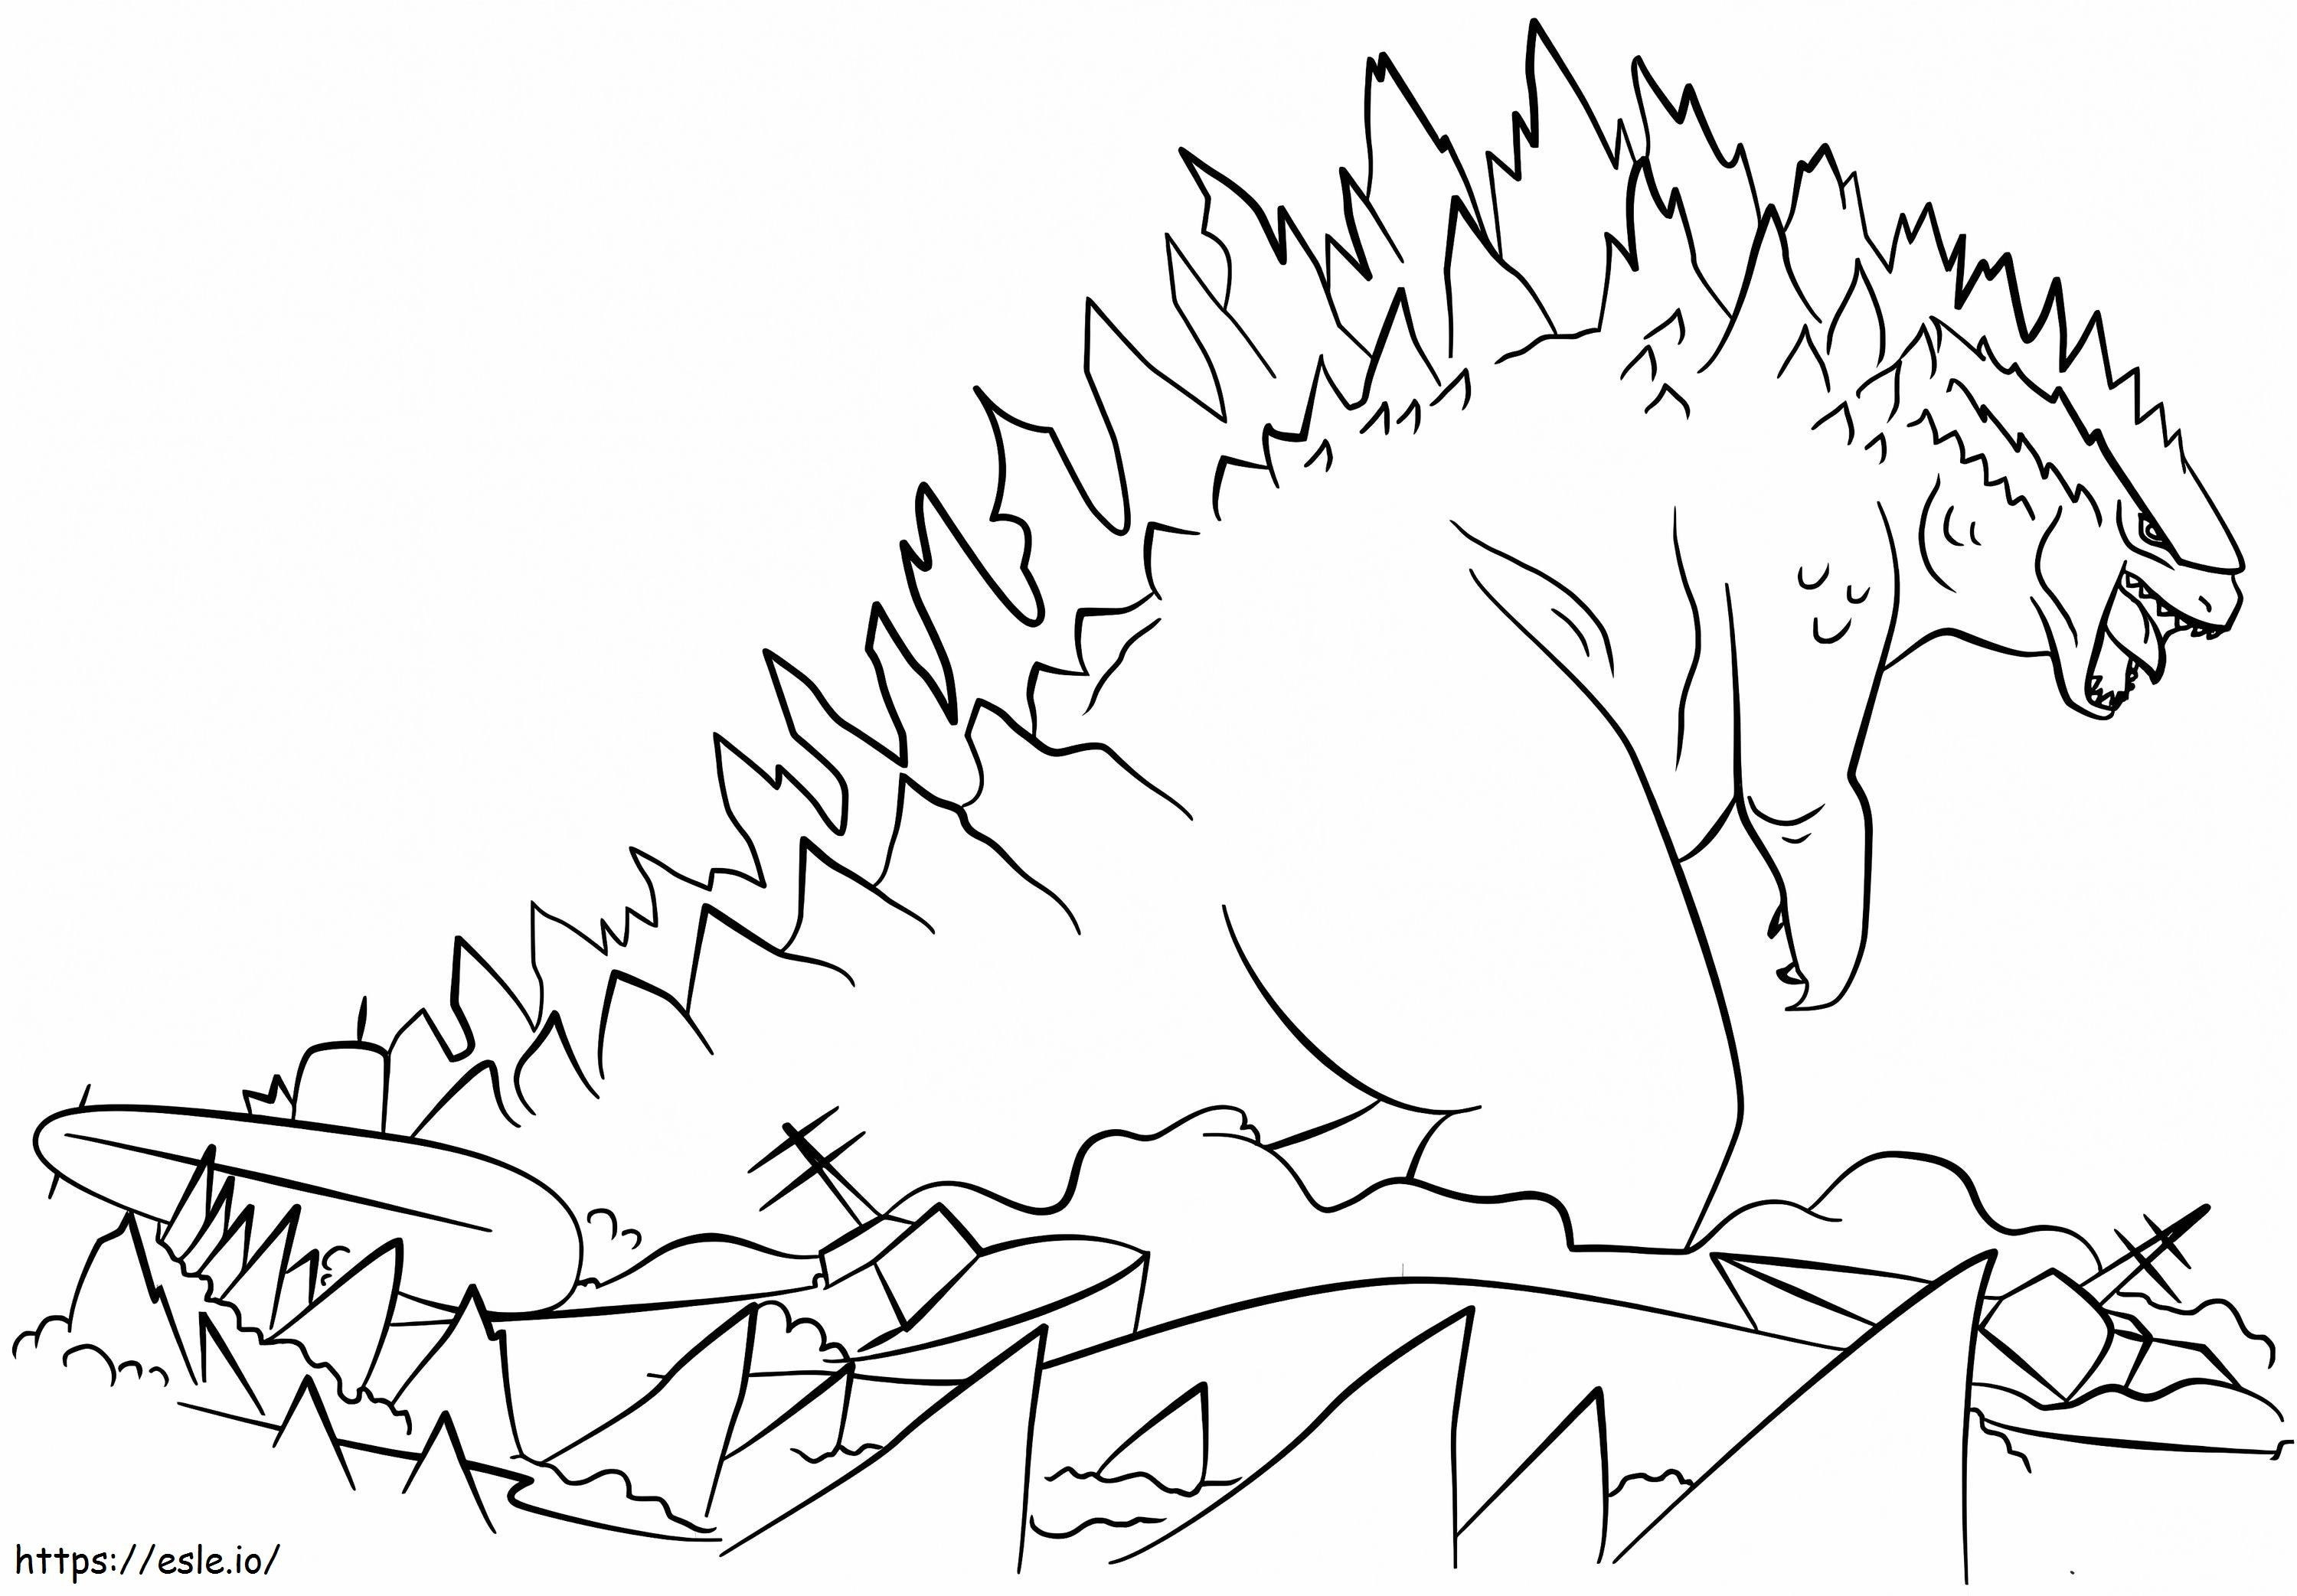 Coloriage Godzilla 2 à imprimer dessin